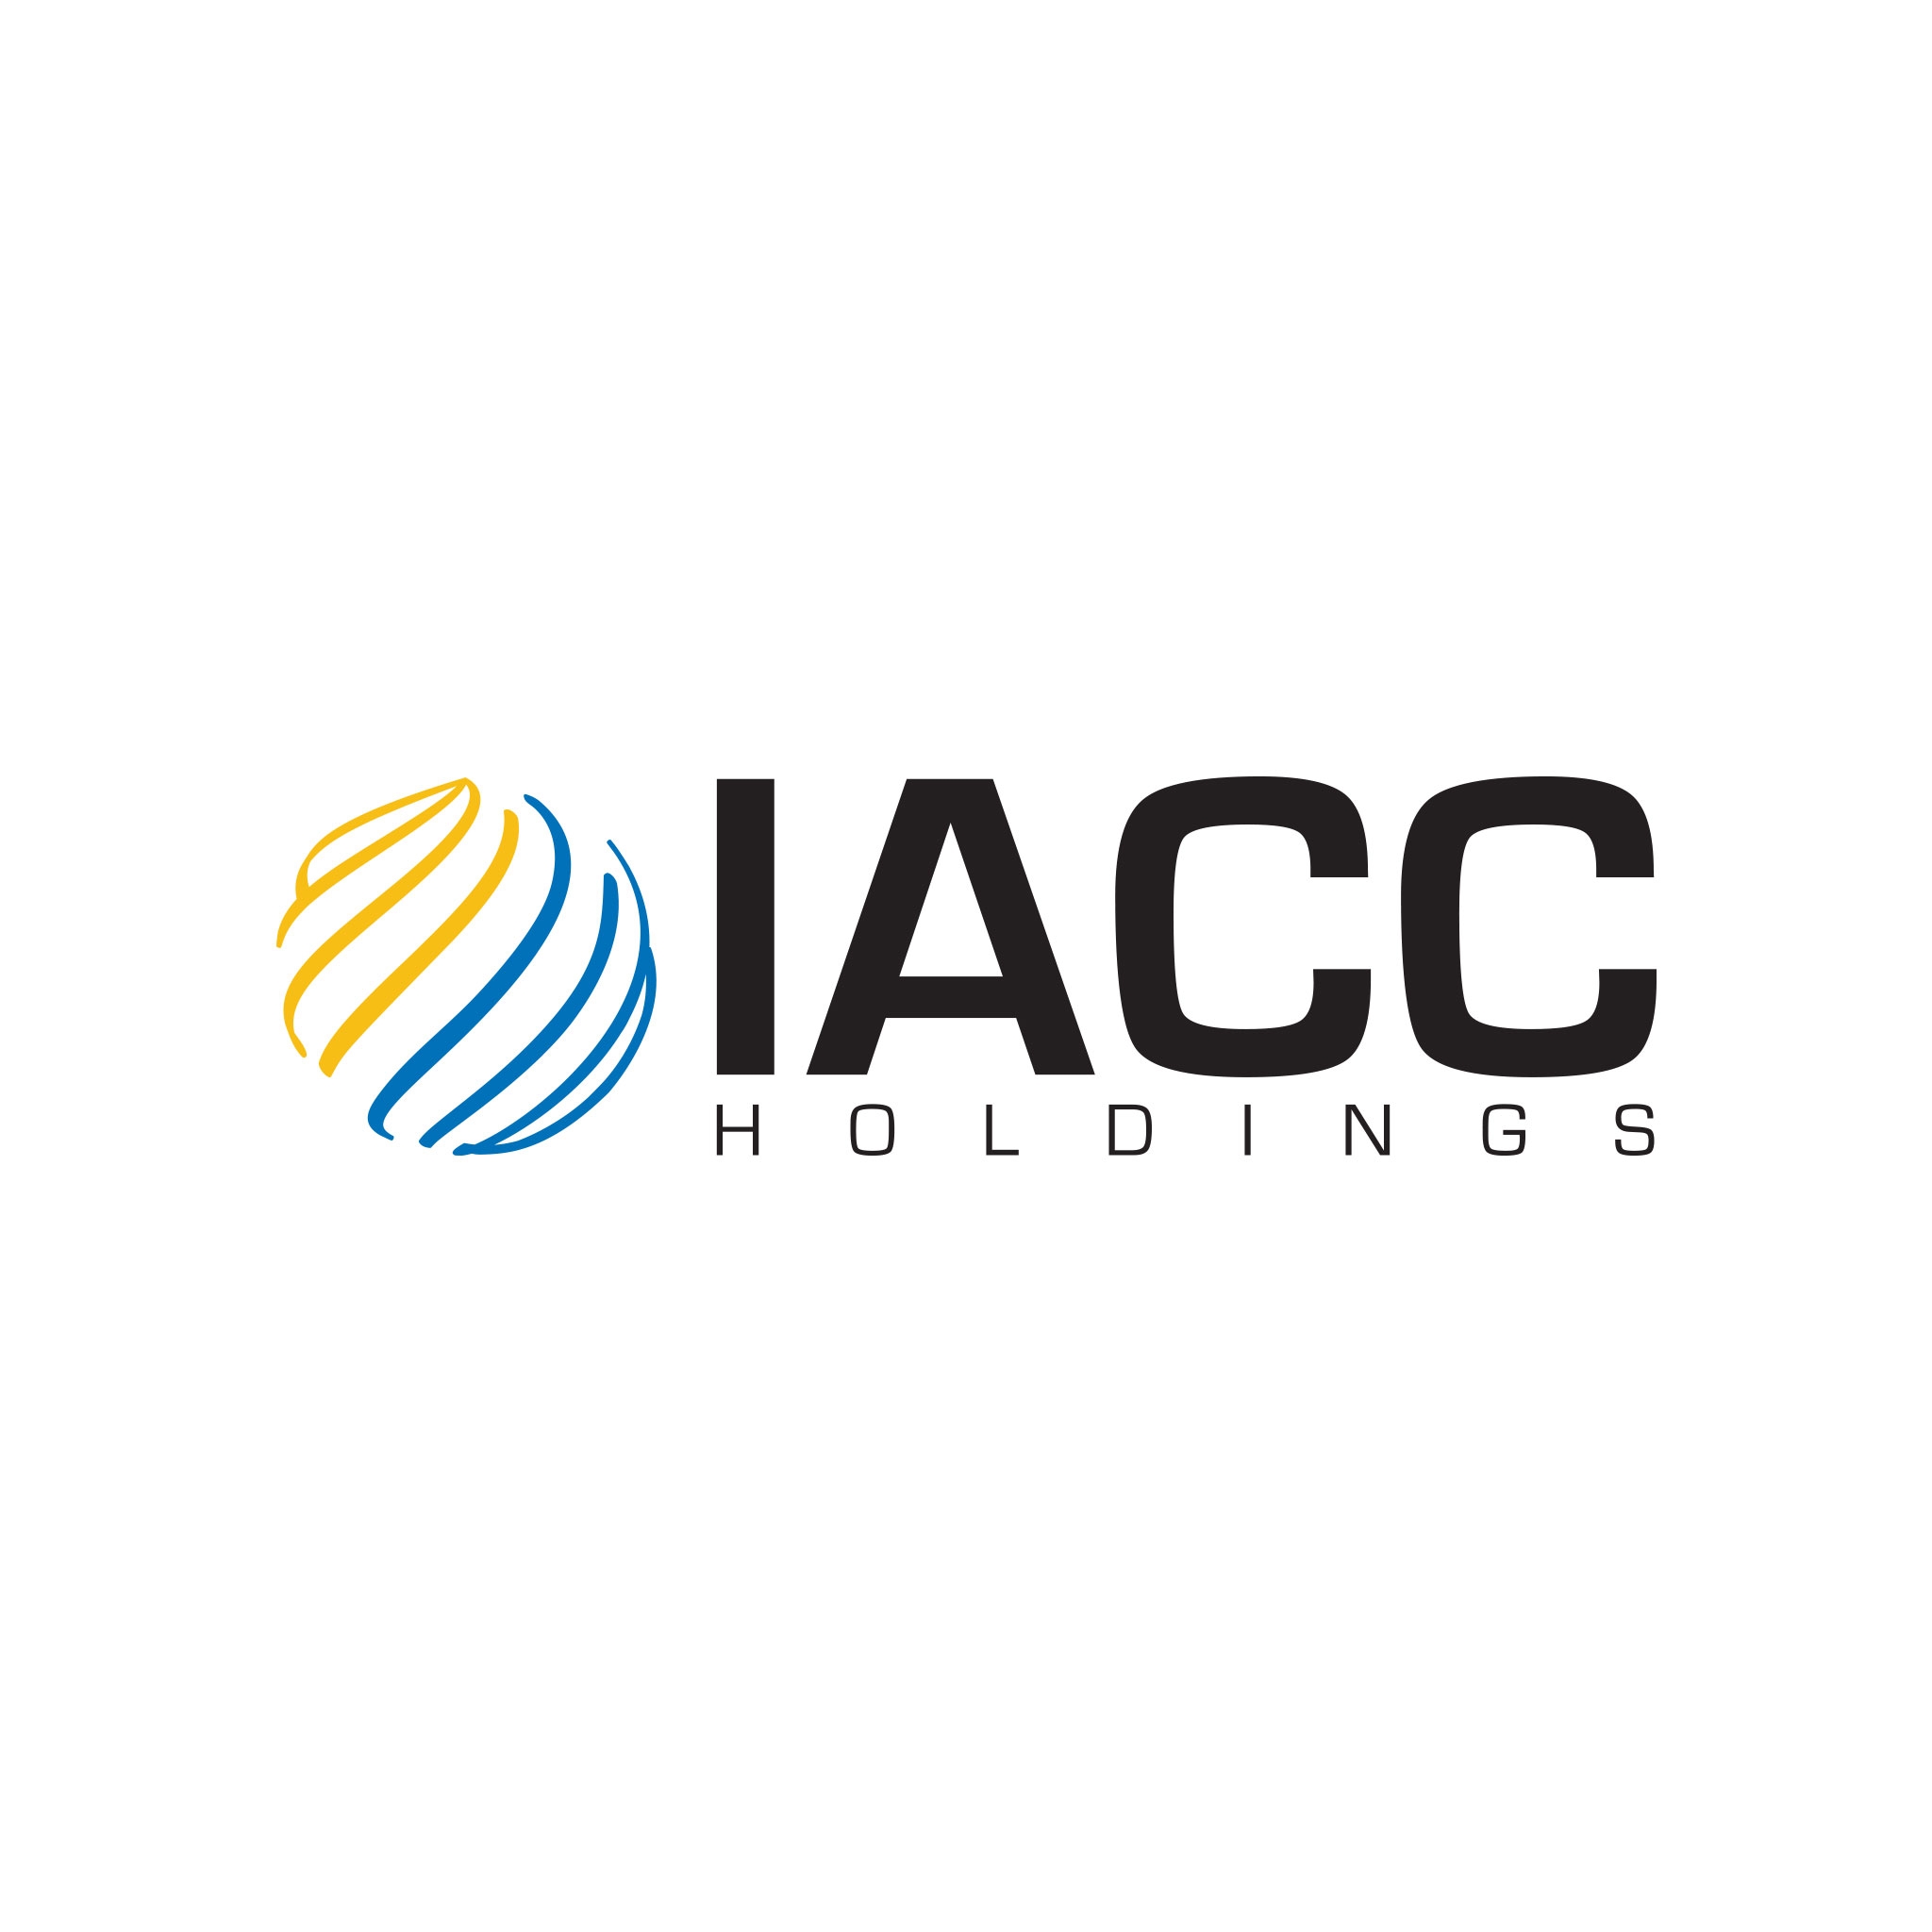 IACC Holdings